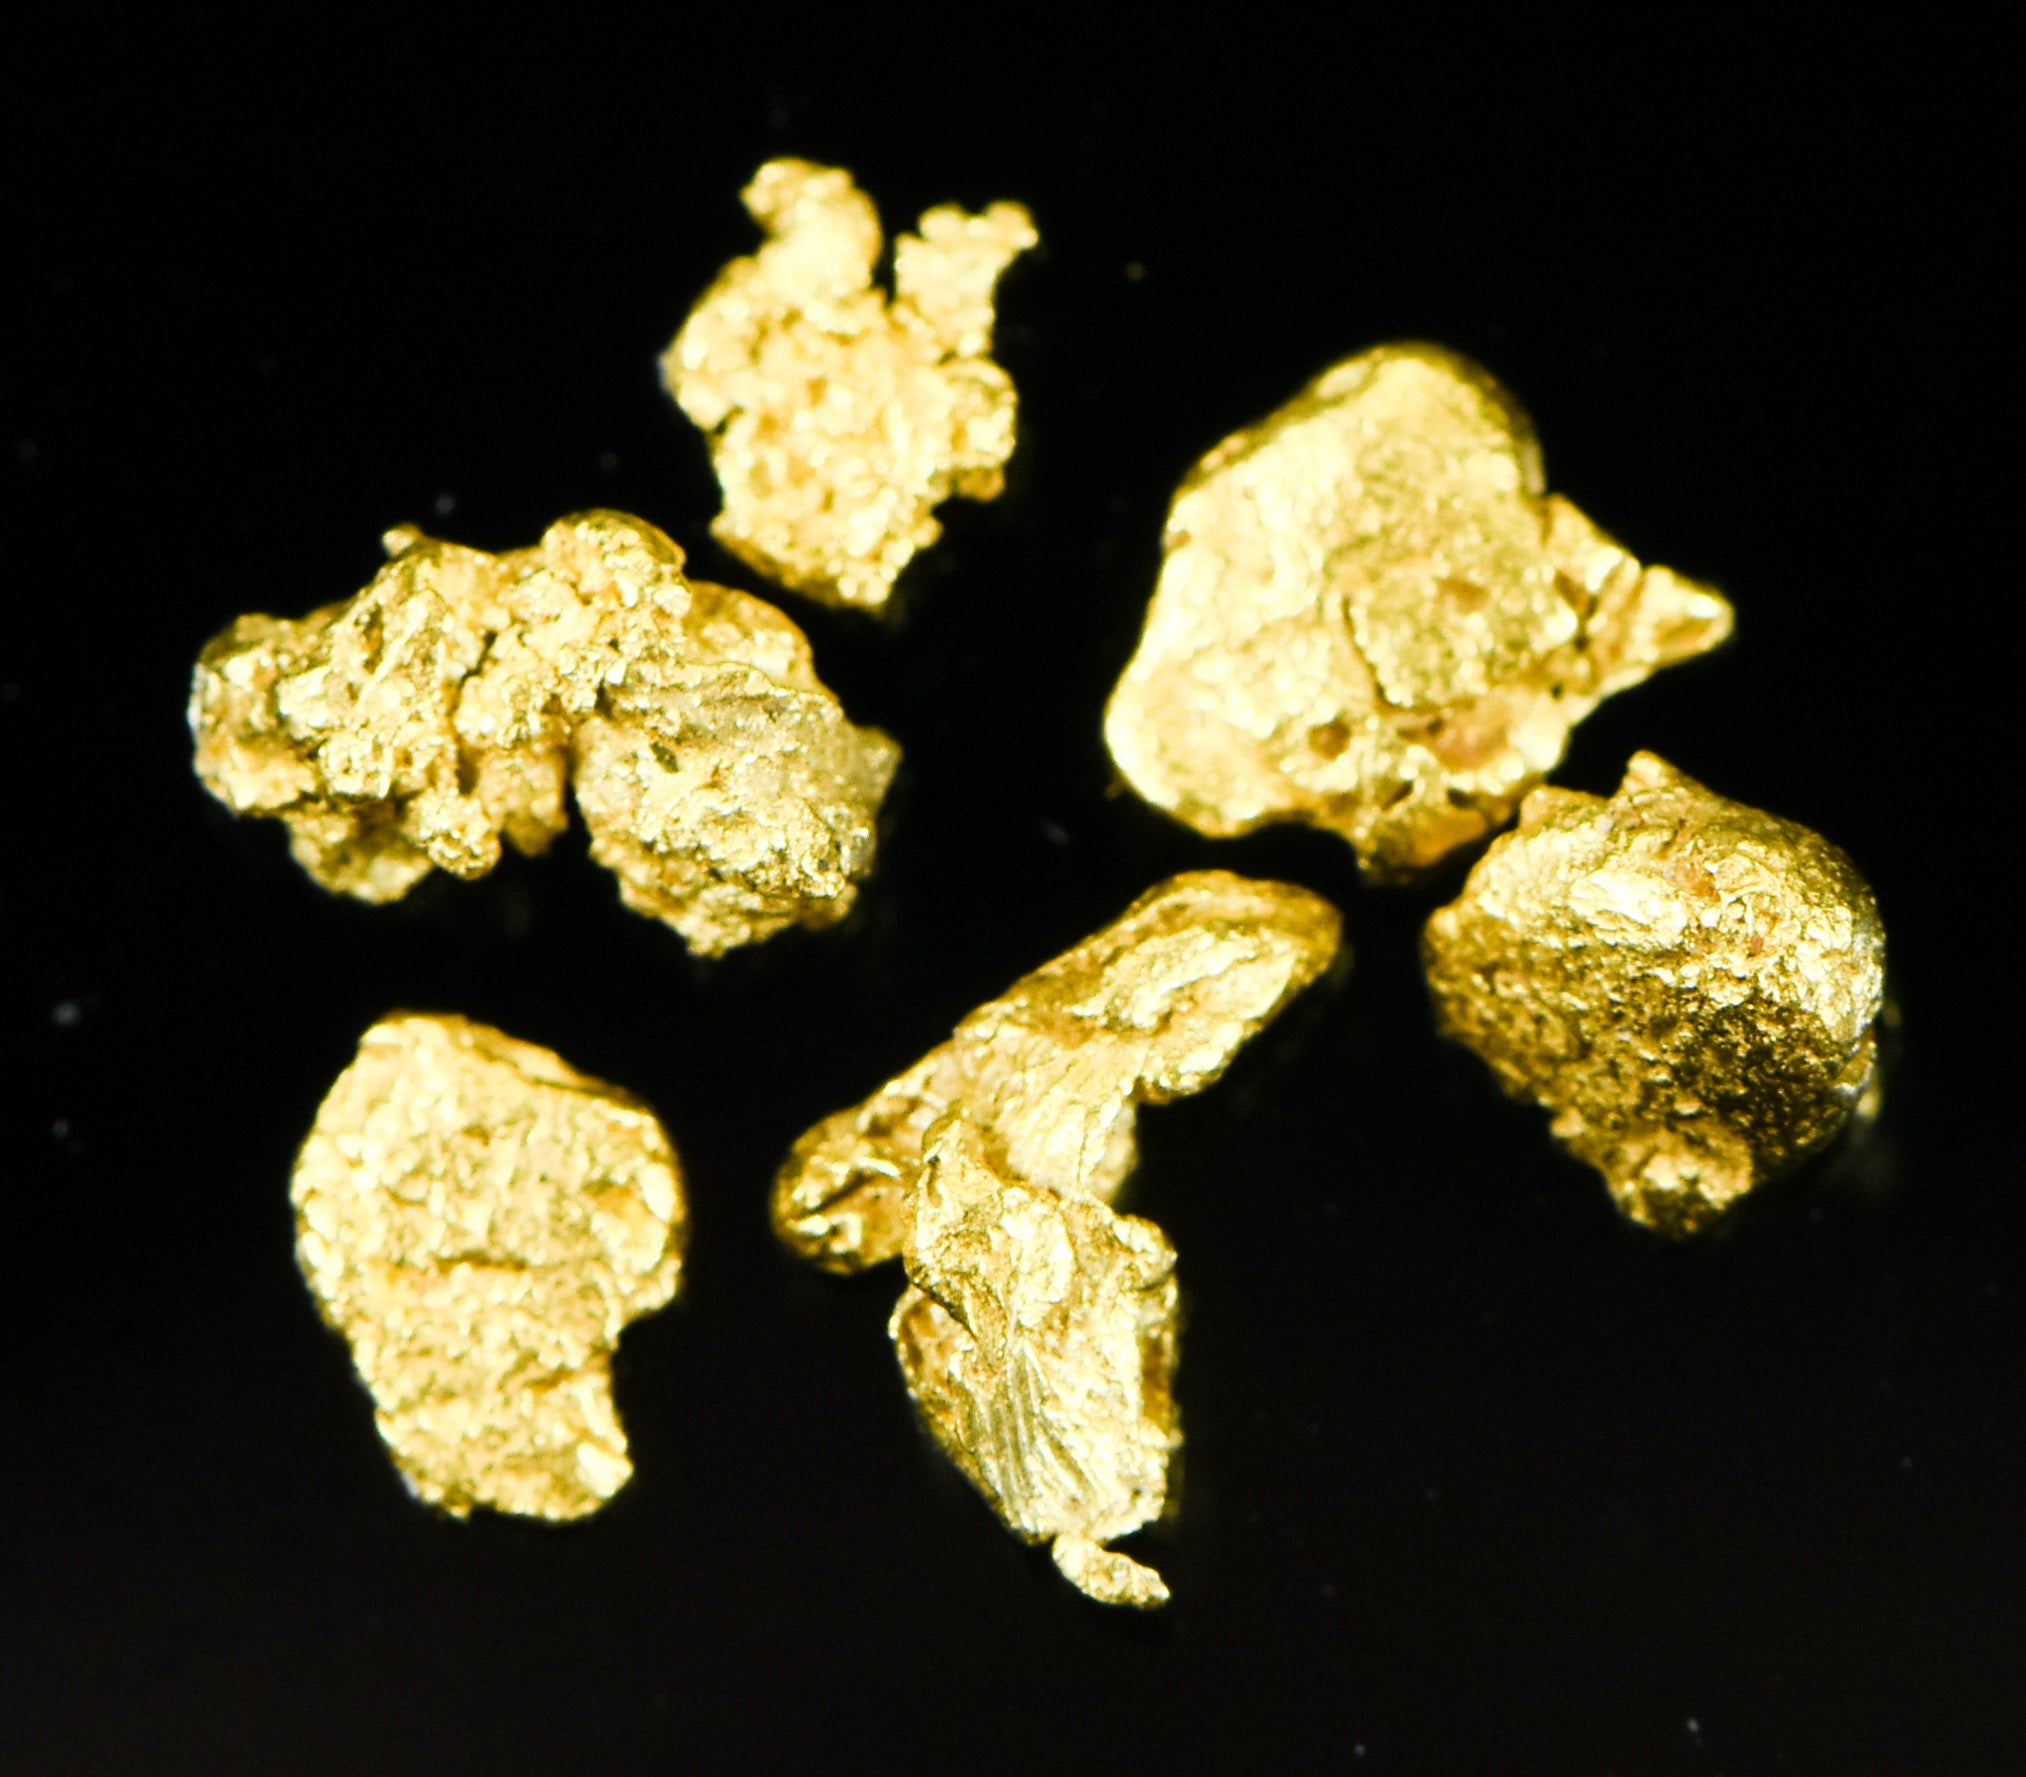 Alaskan Yukon Gold Rush Nuggets #8 Mesh .78 Grams or 1/2 dwt of Fines